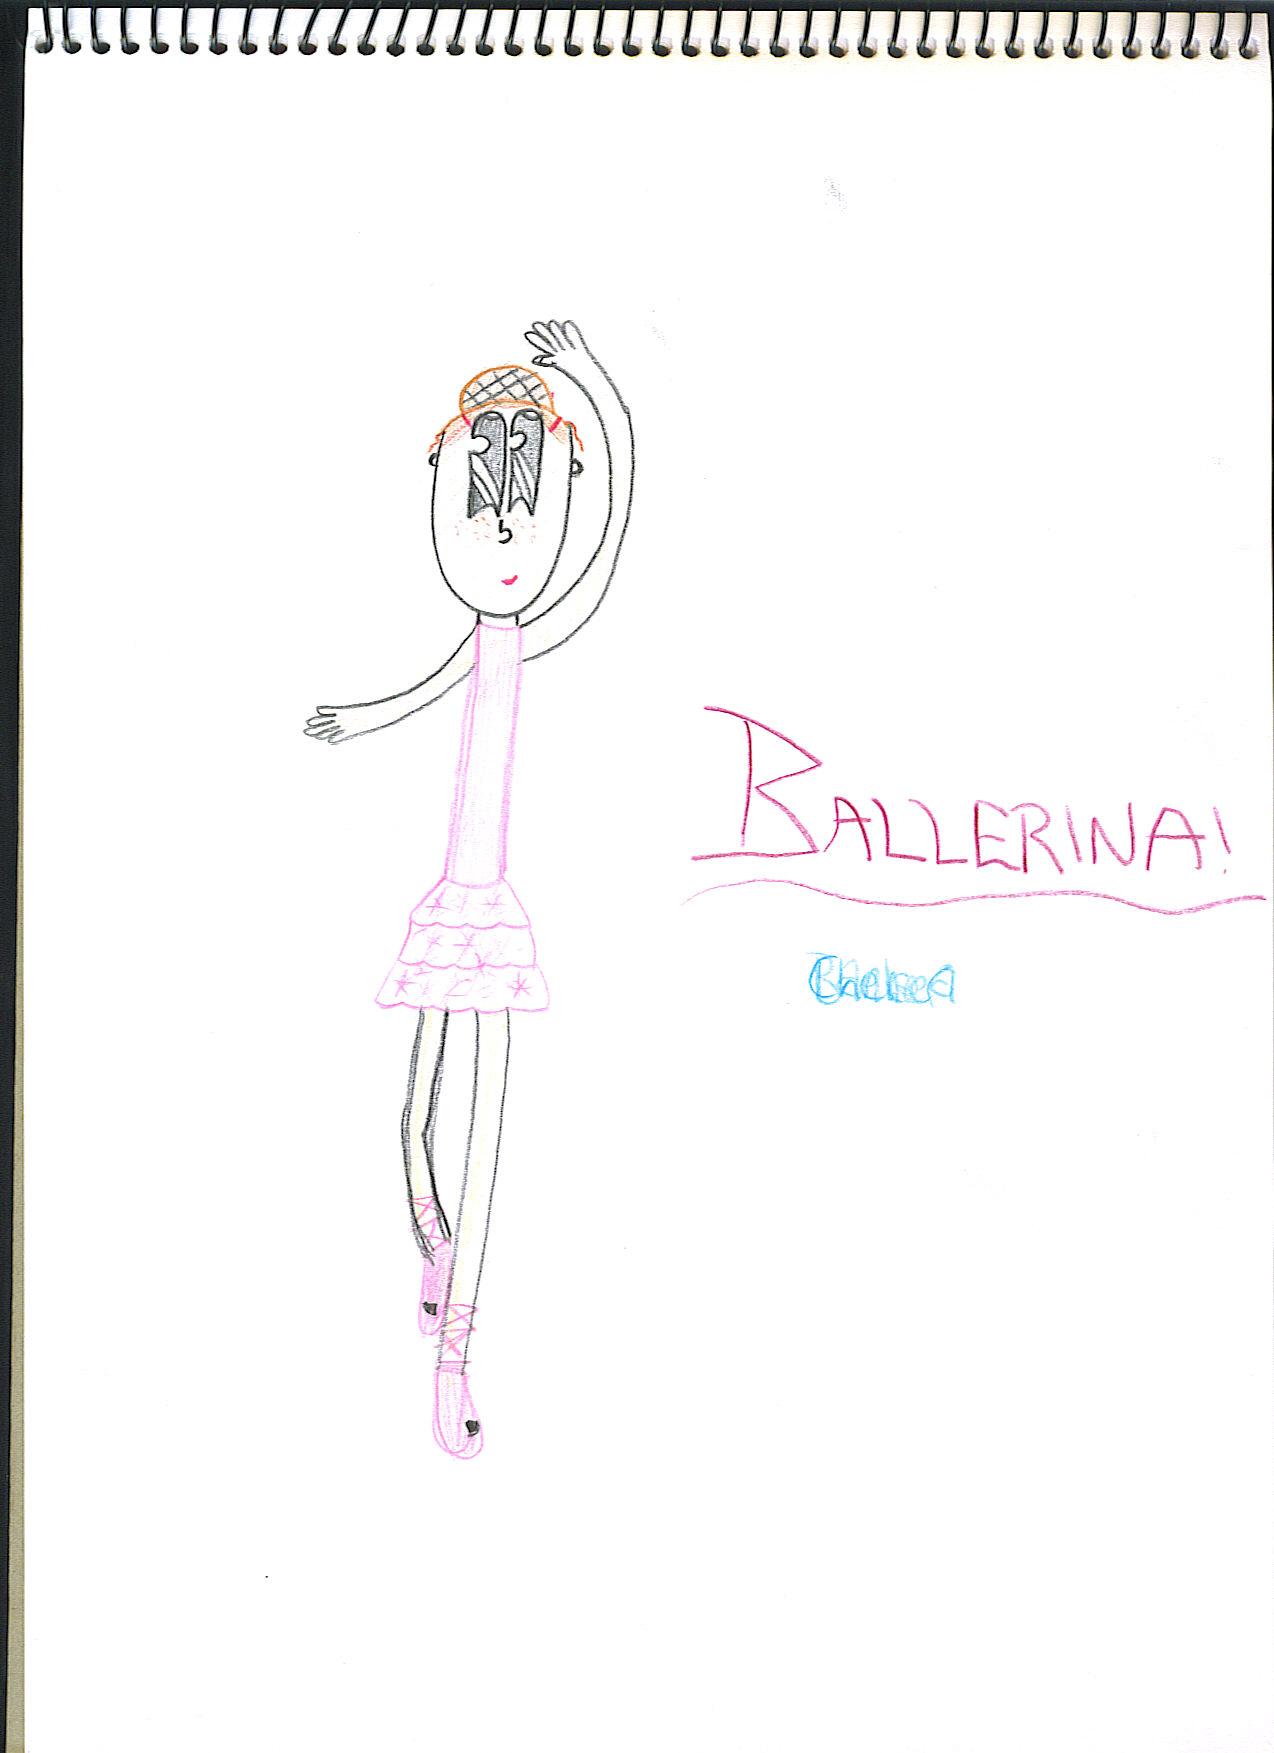 Ballerina by rainbowretard11